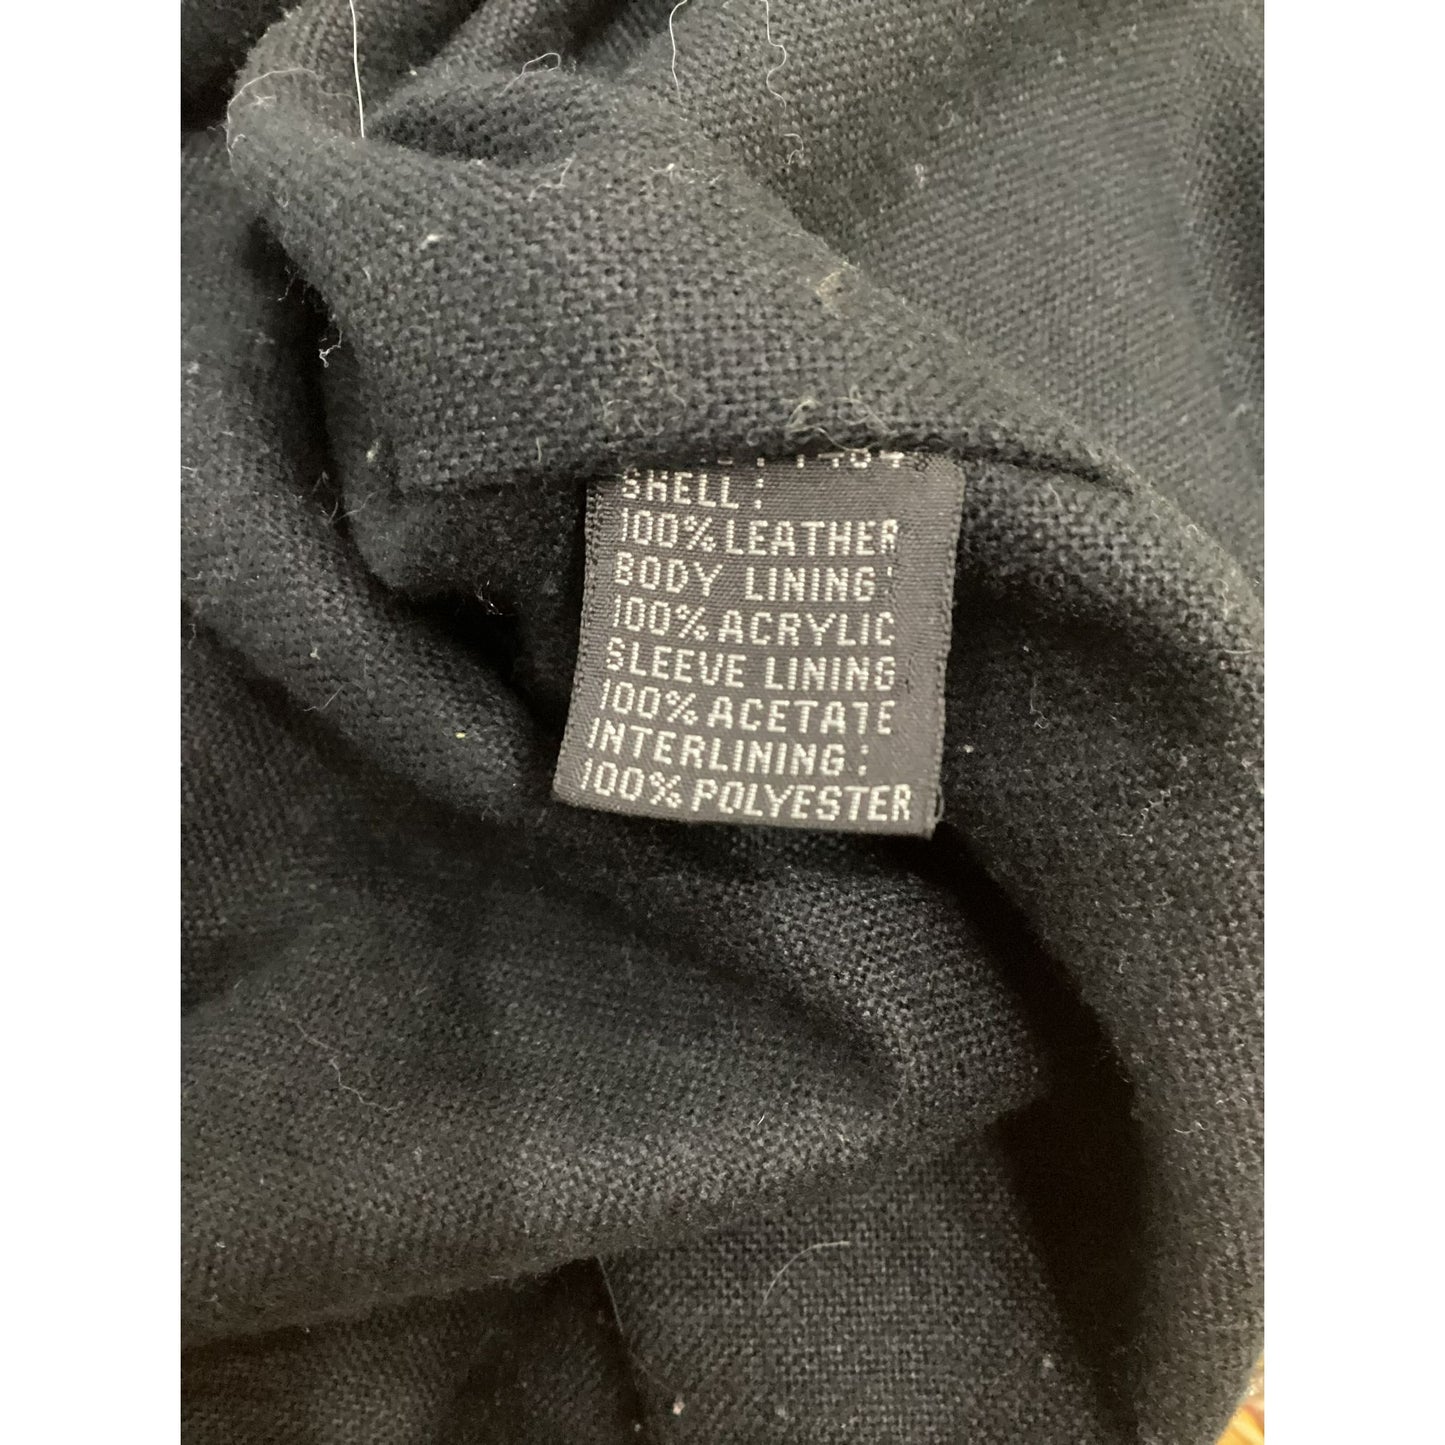 Men’s Andrew Marc Leather Jacket